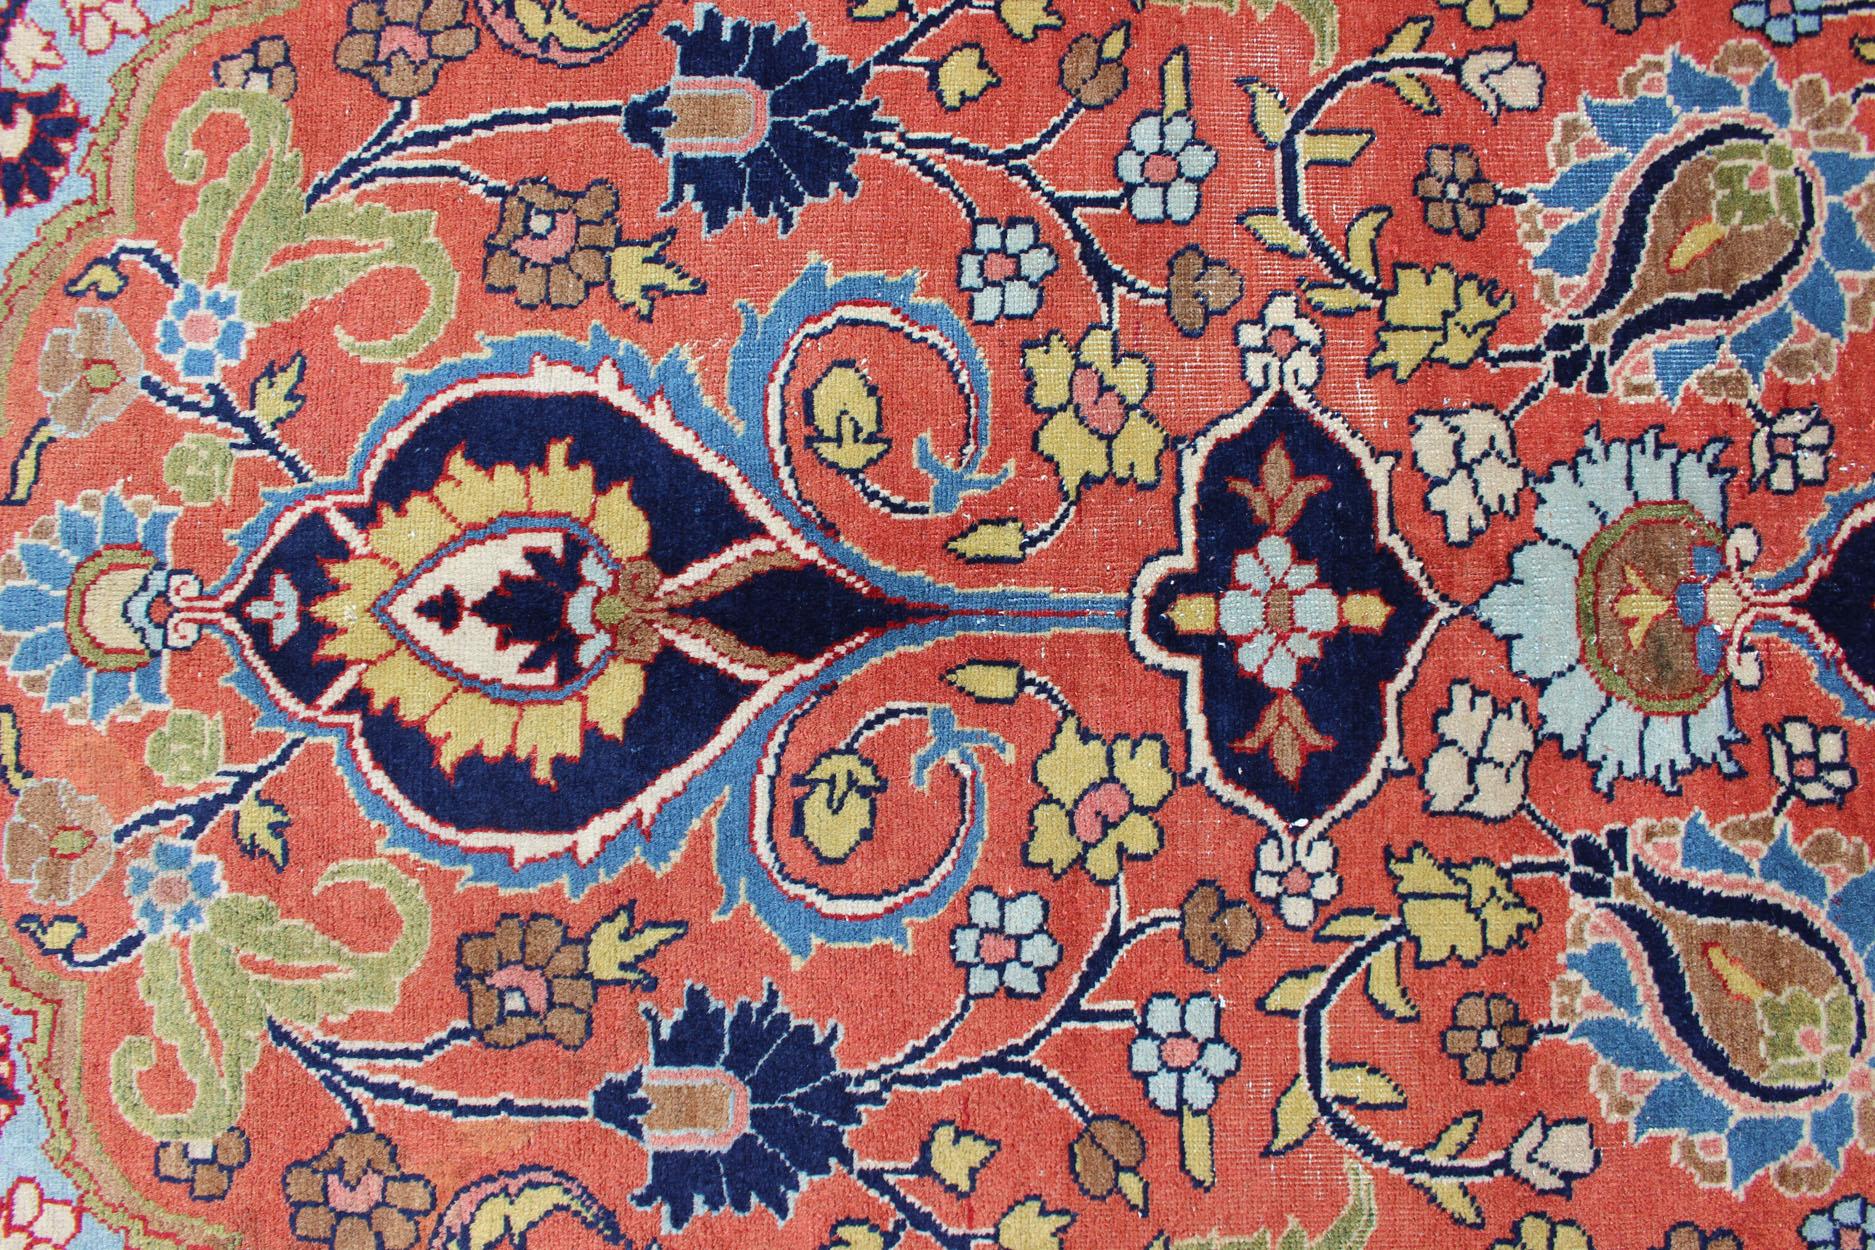 Antique Fine Persian Classic Design Tabriz Rug in Orange, Blue & Multi Colors For Sale 8